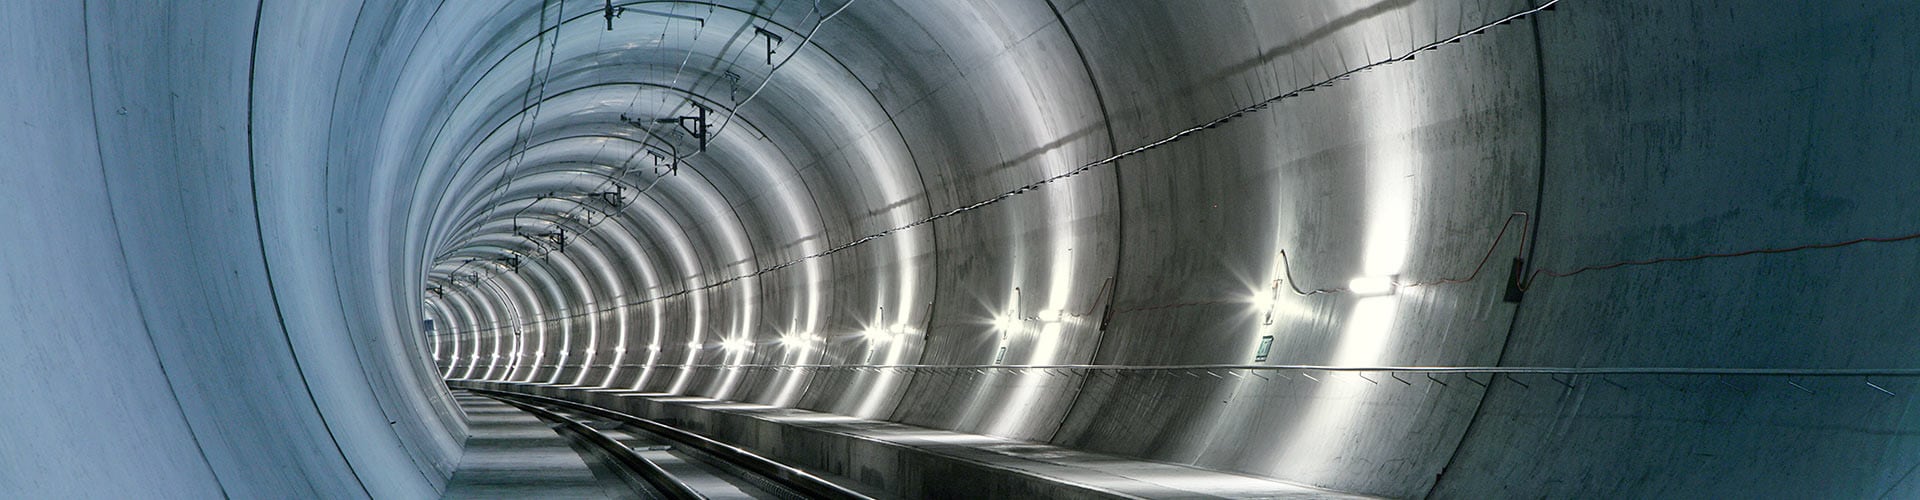 loesungen_infrastruktur_tunnel.jpg